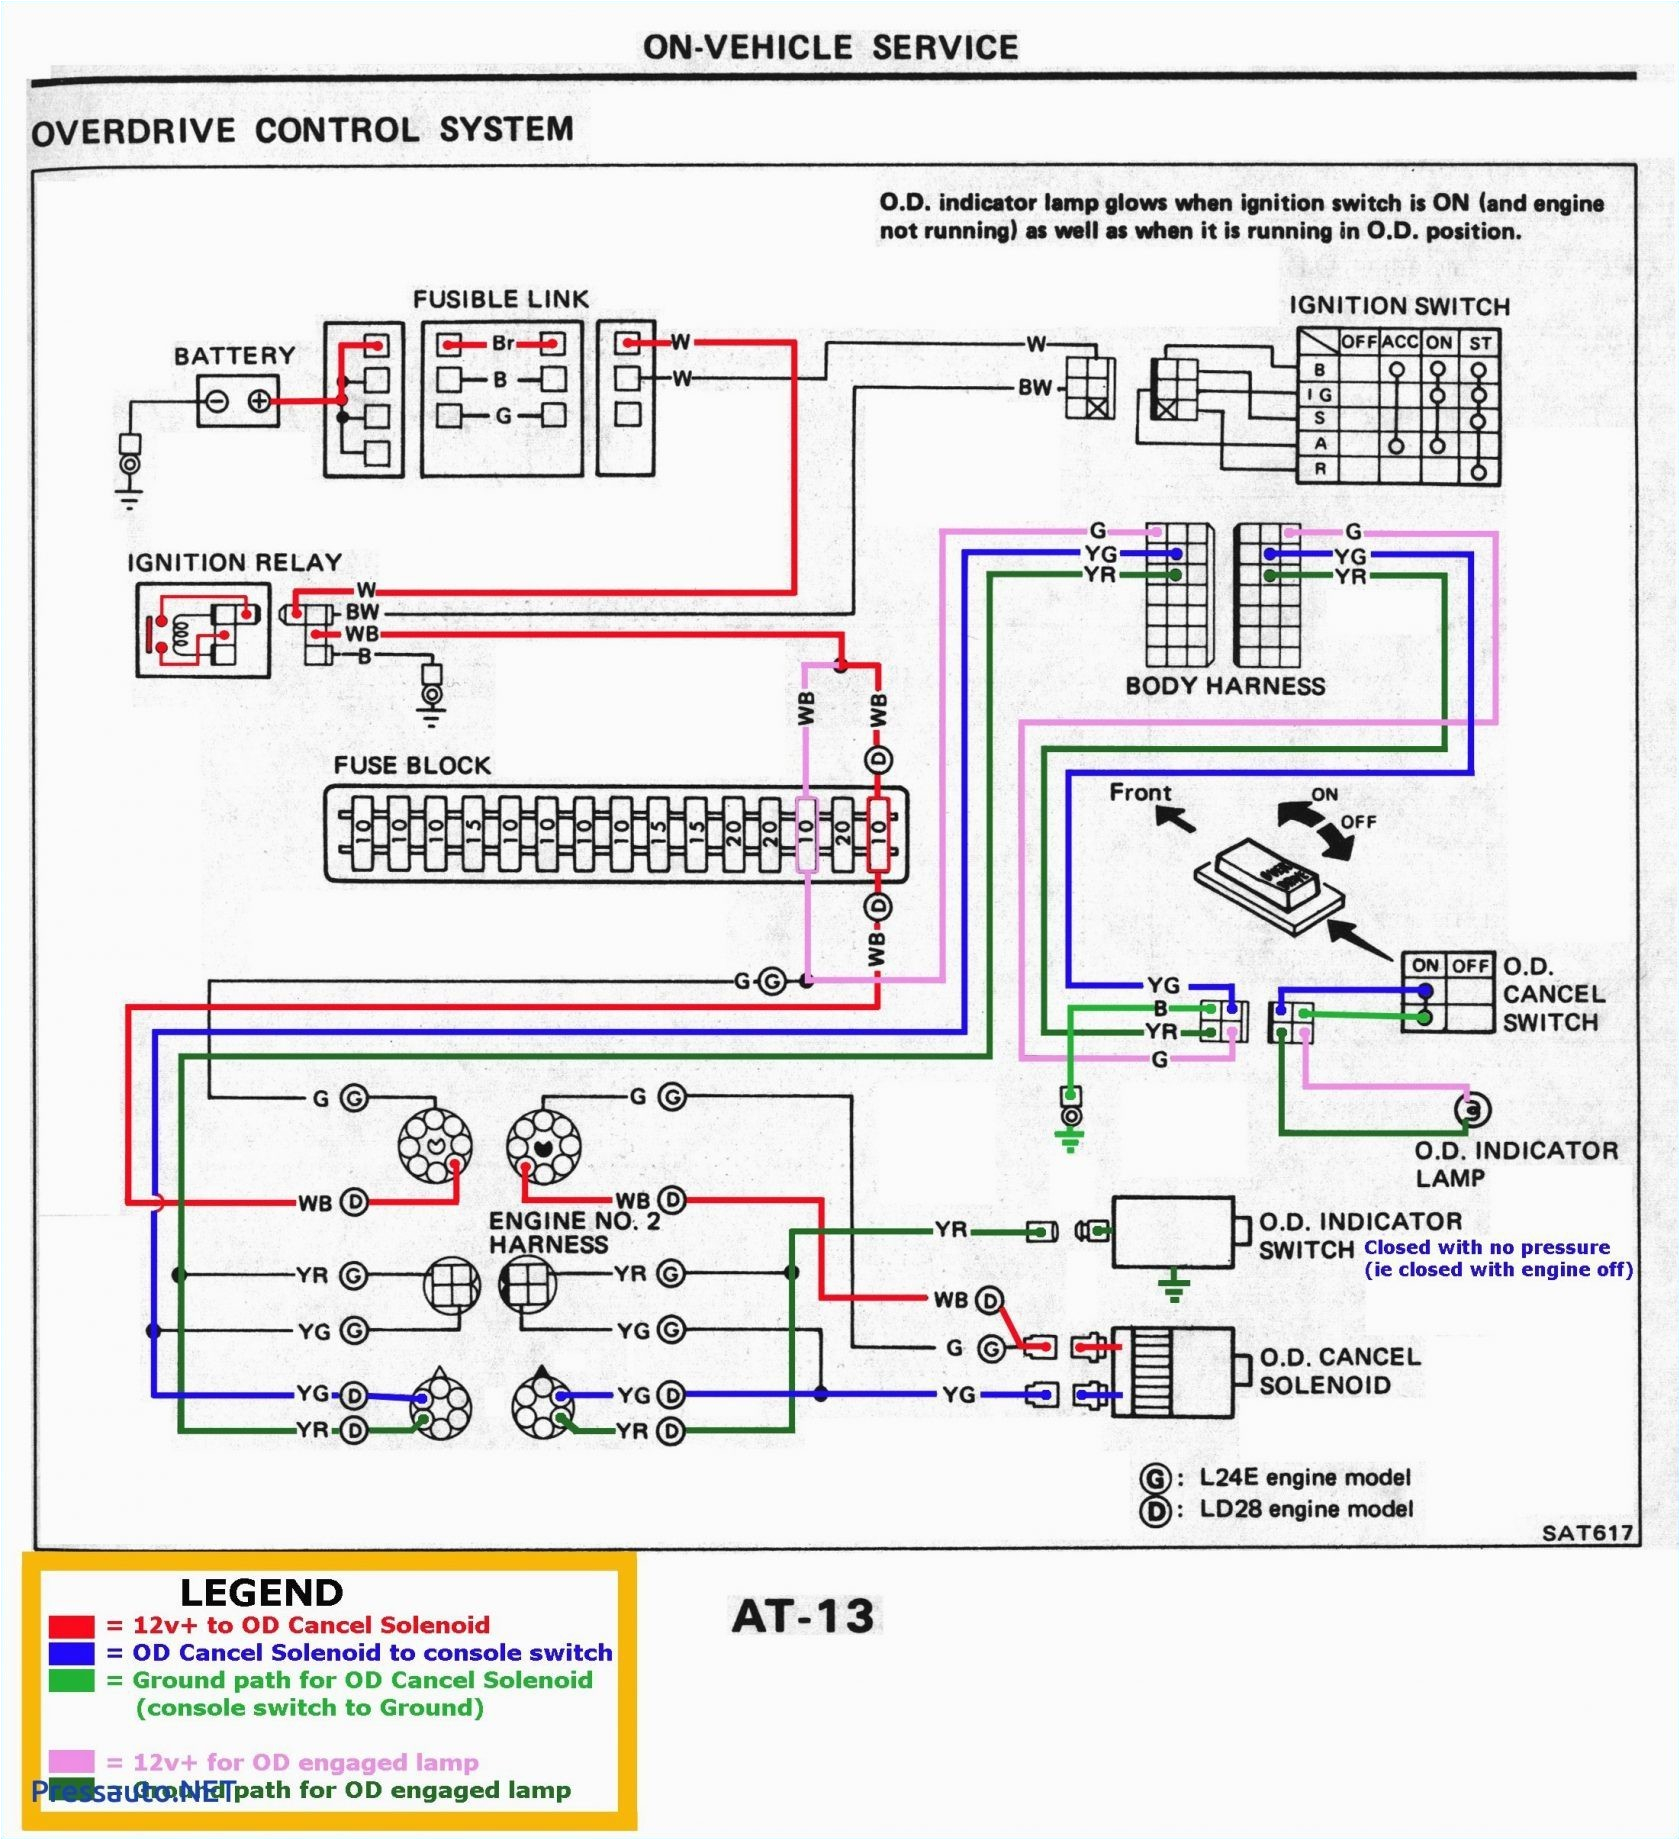 dynamark riding mower wiring diagram wiring diagram dynamark lawn tractor wiring diagram dynamark wiring diagram